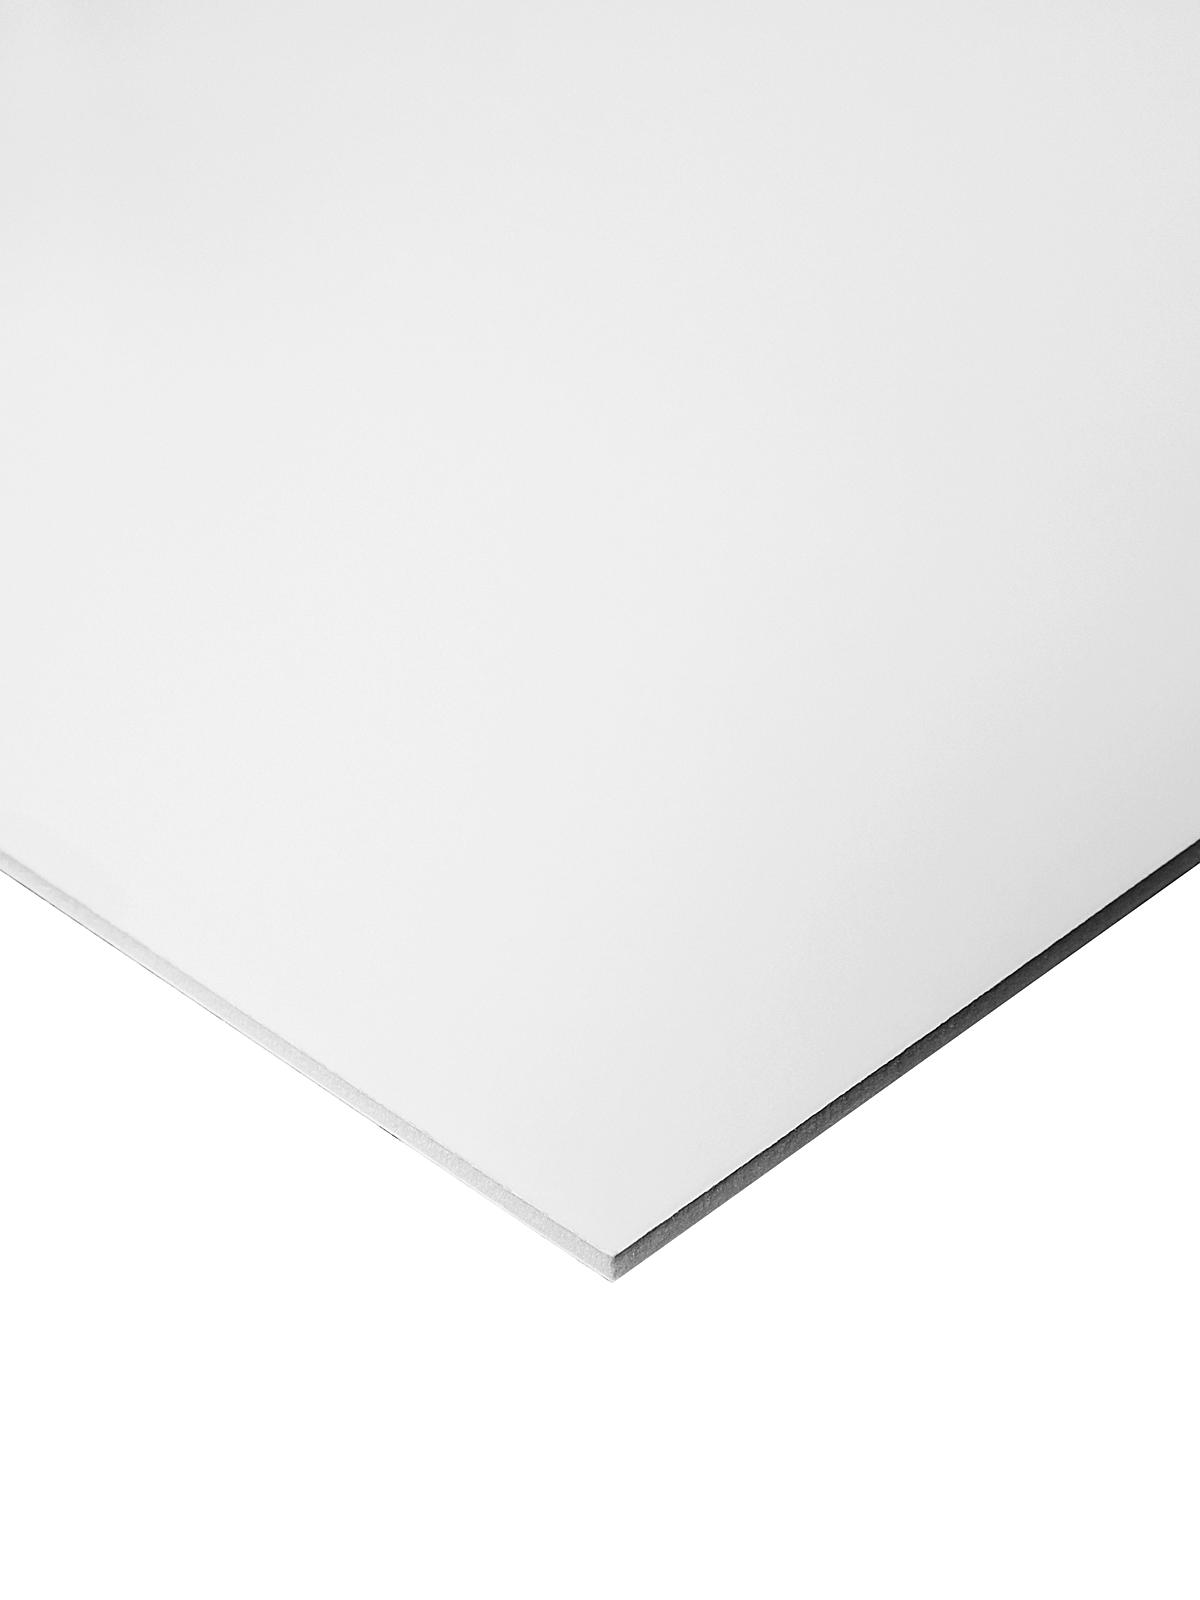 Fome-cor Board White 3 16 In. X 30 In. X 40 In. Each